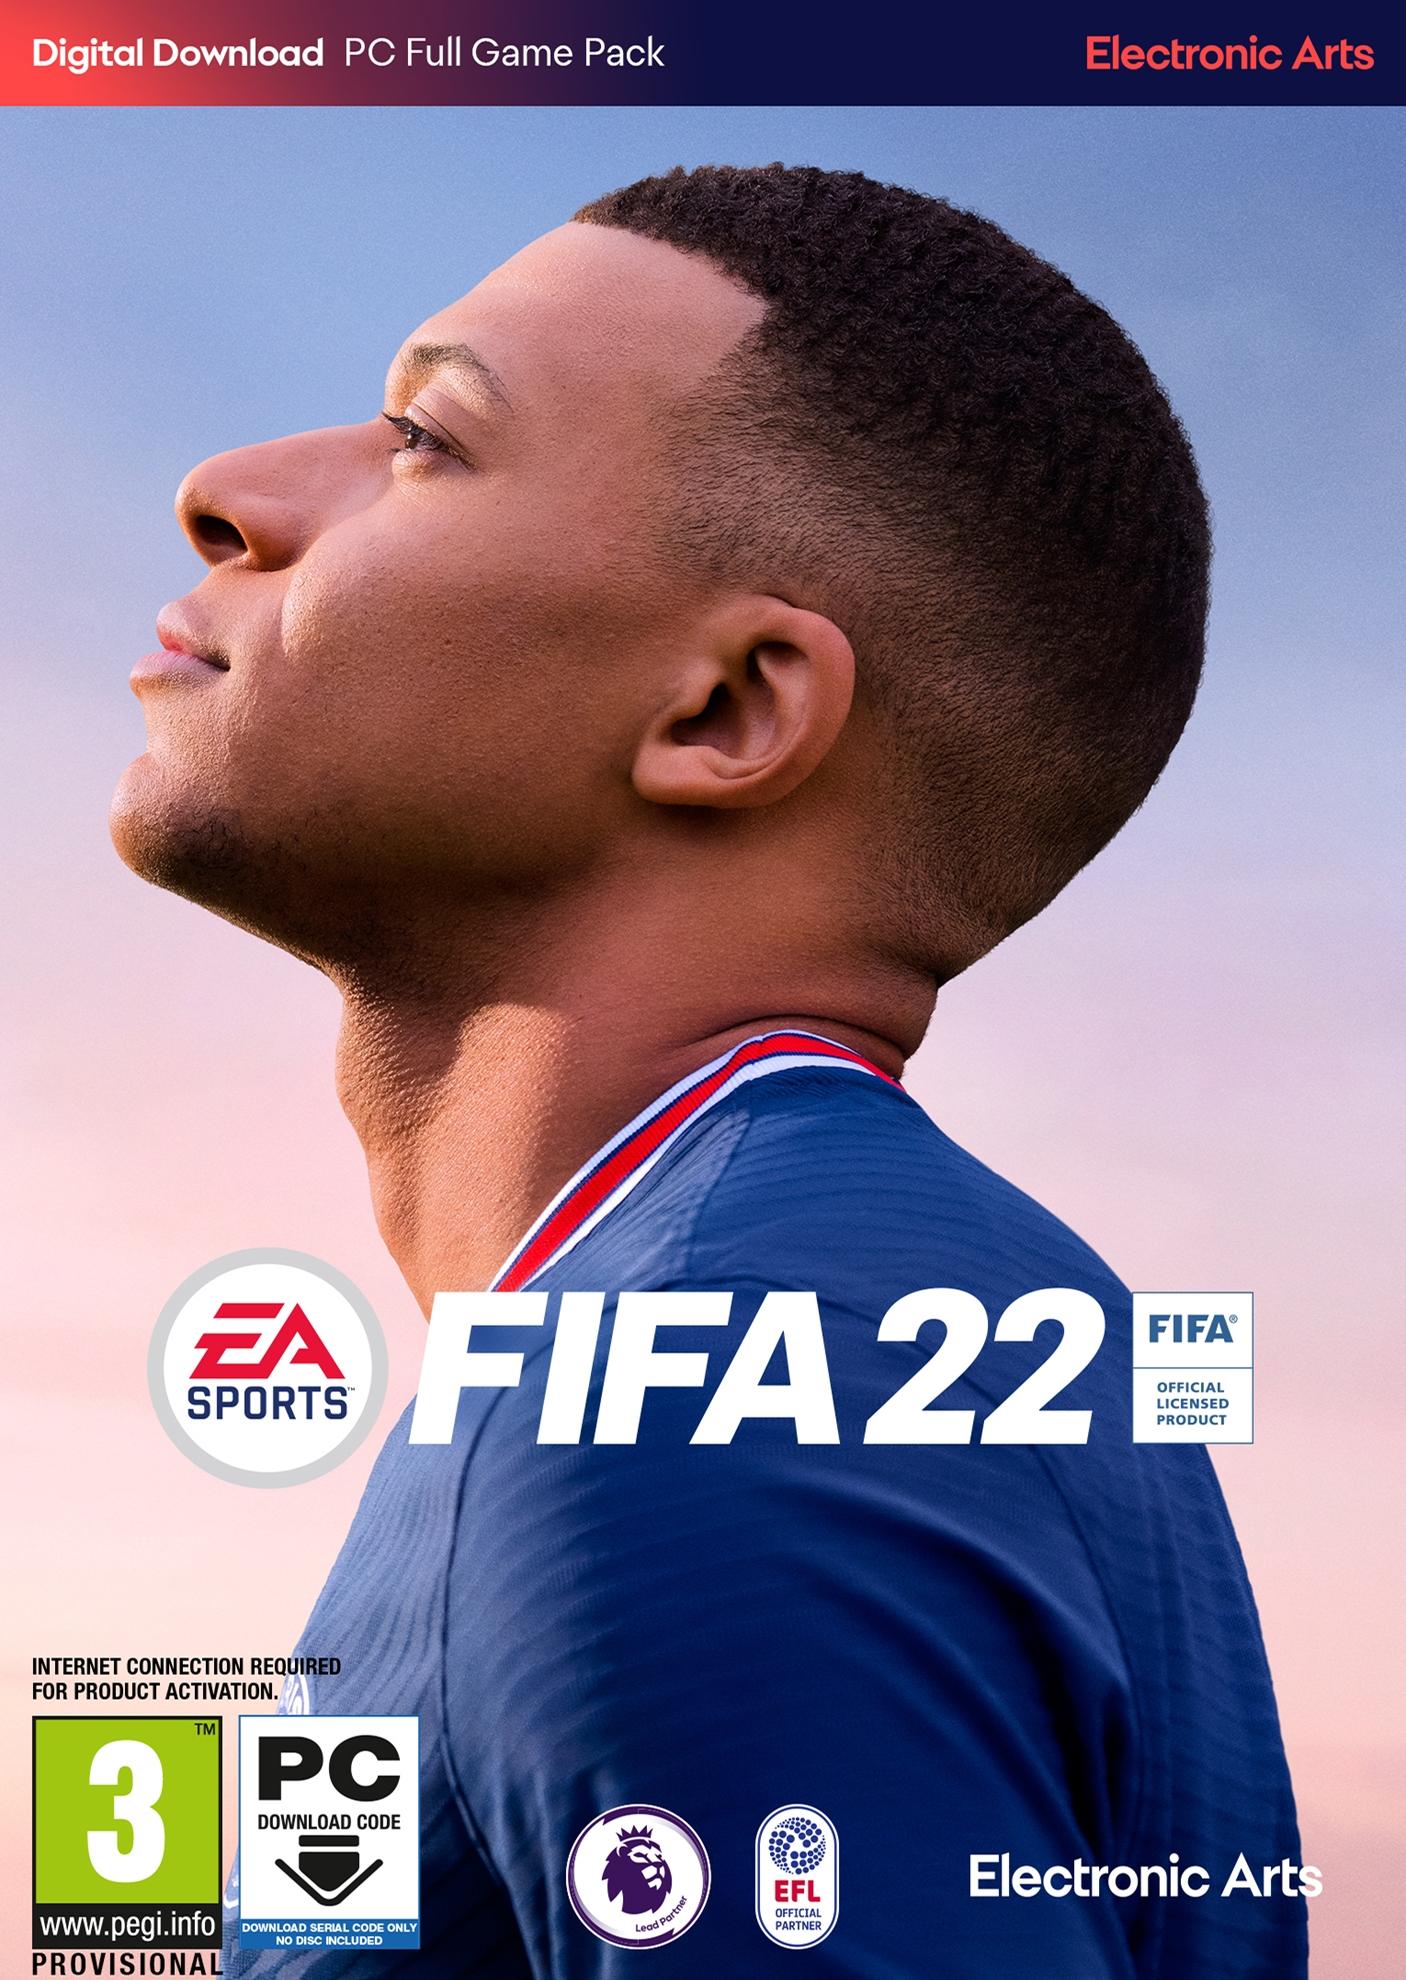 FIFA 22 Standard Edition